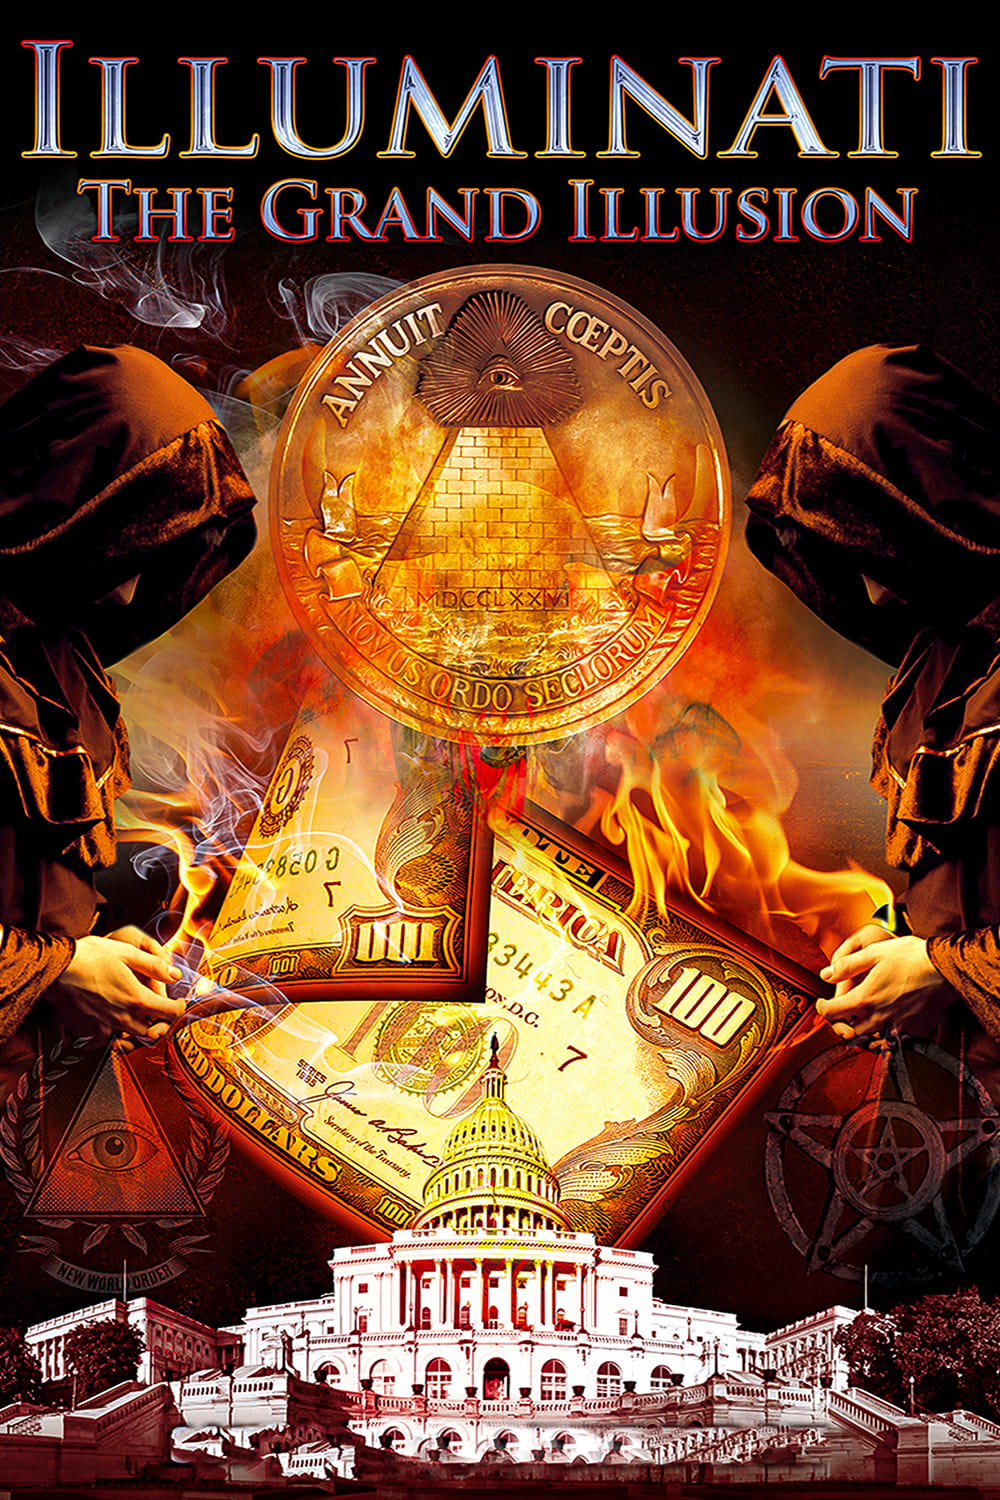 Illuminati: The Grand Illusion